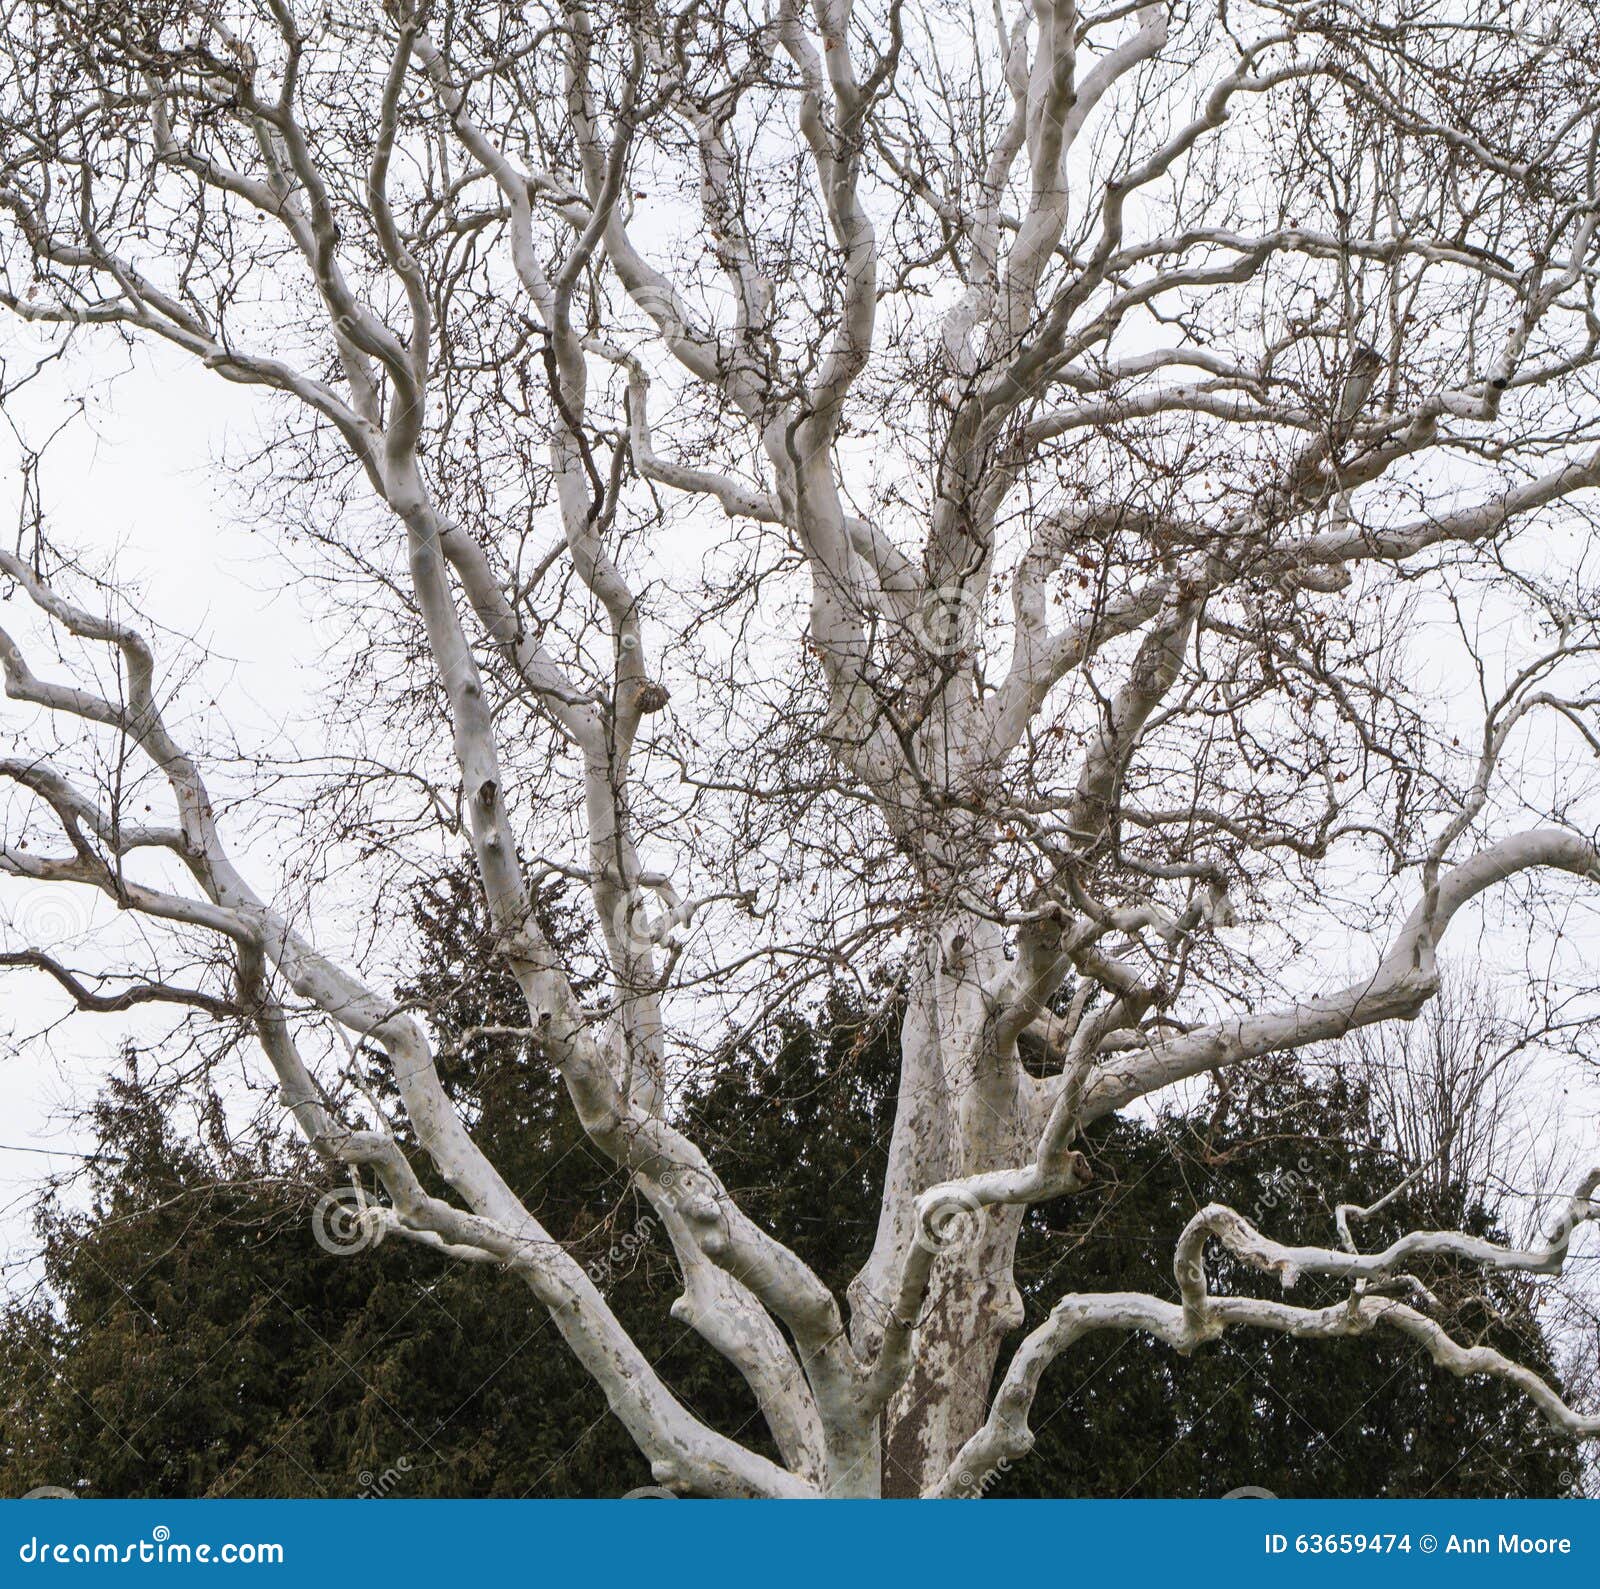 Tree With White Bark Stock Photo - Image: 63659474